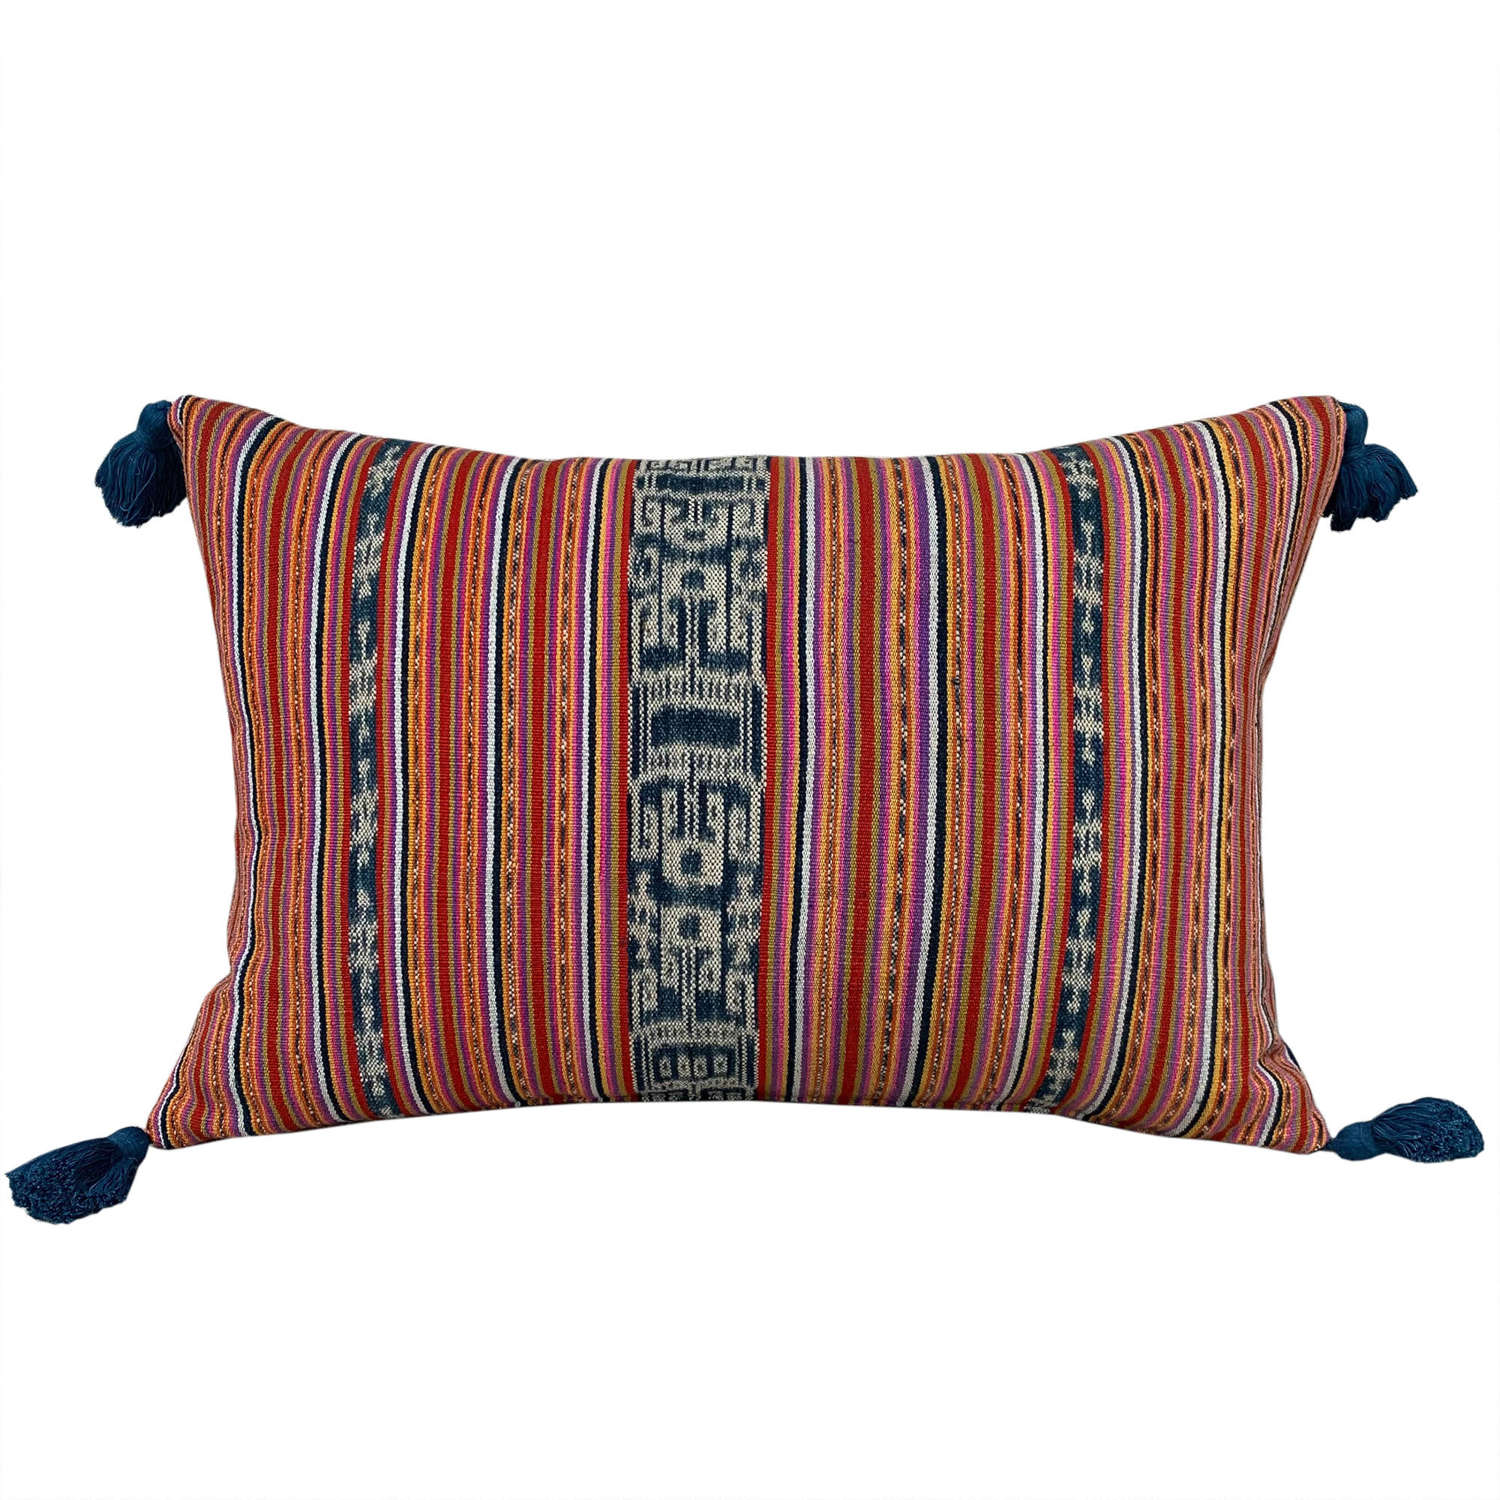 Timor ikat cushions with tassels